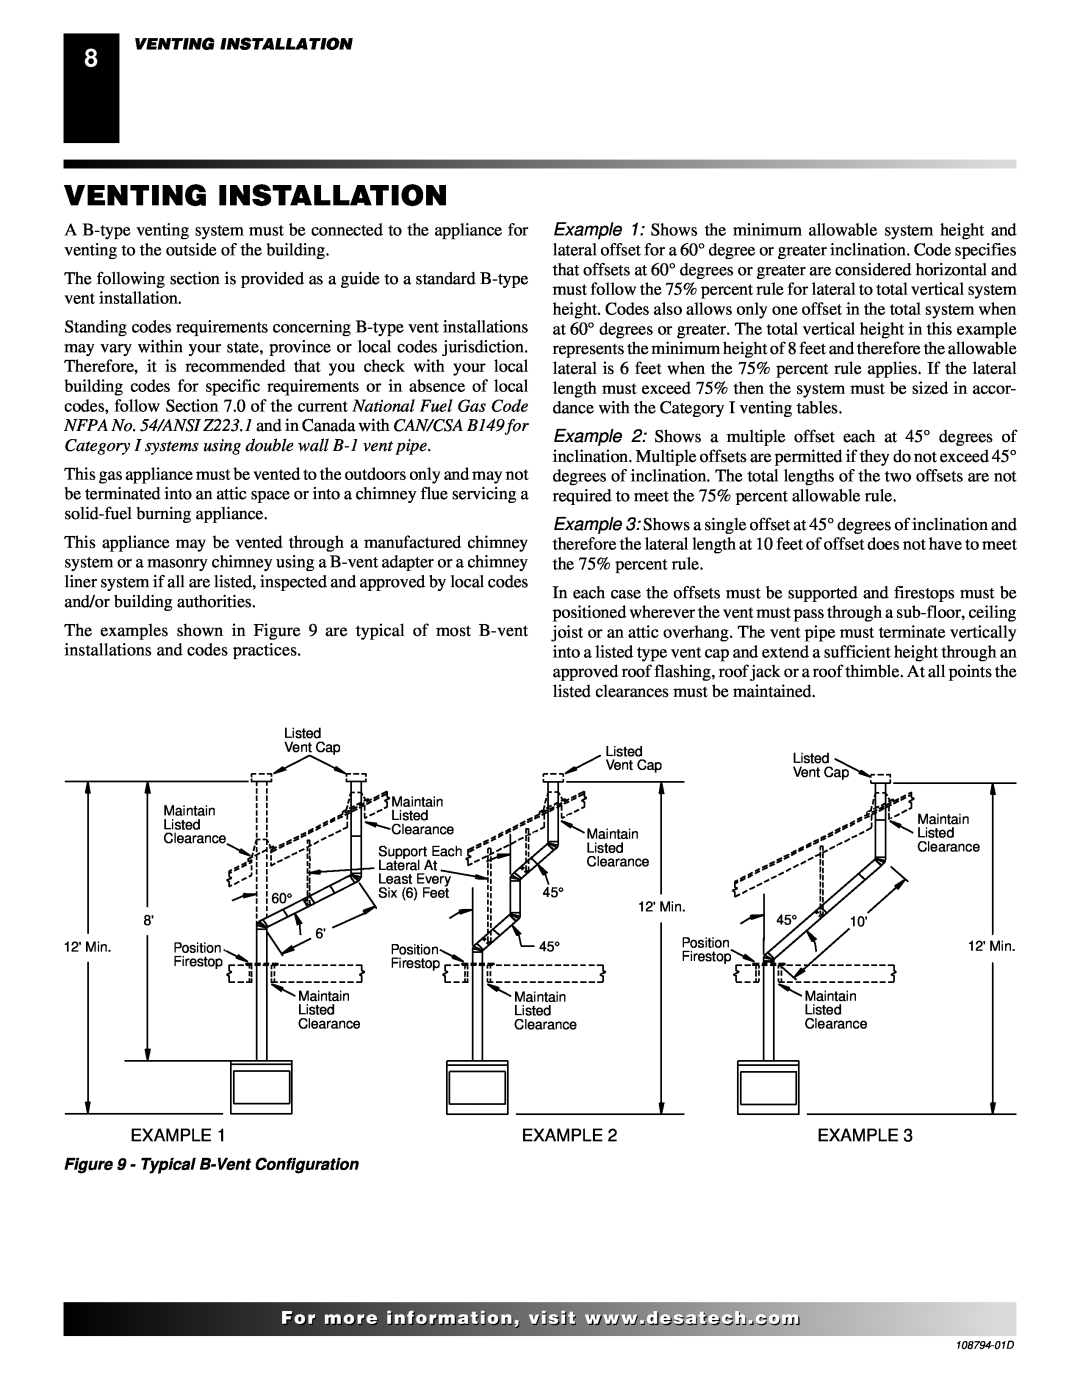 Desa VP325E(B) installation manual Venting Installation, Typical B-Vent Configuration 